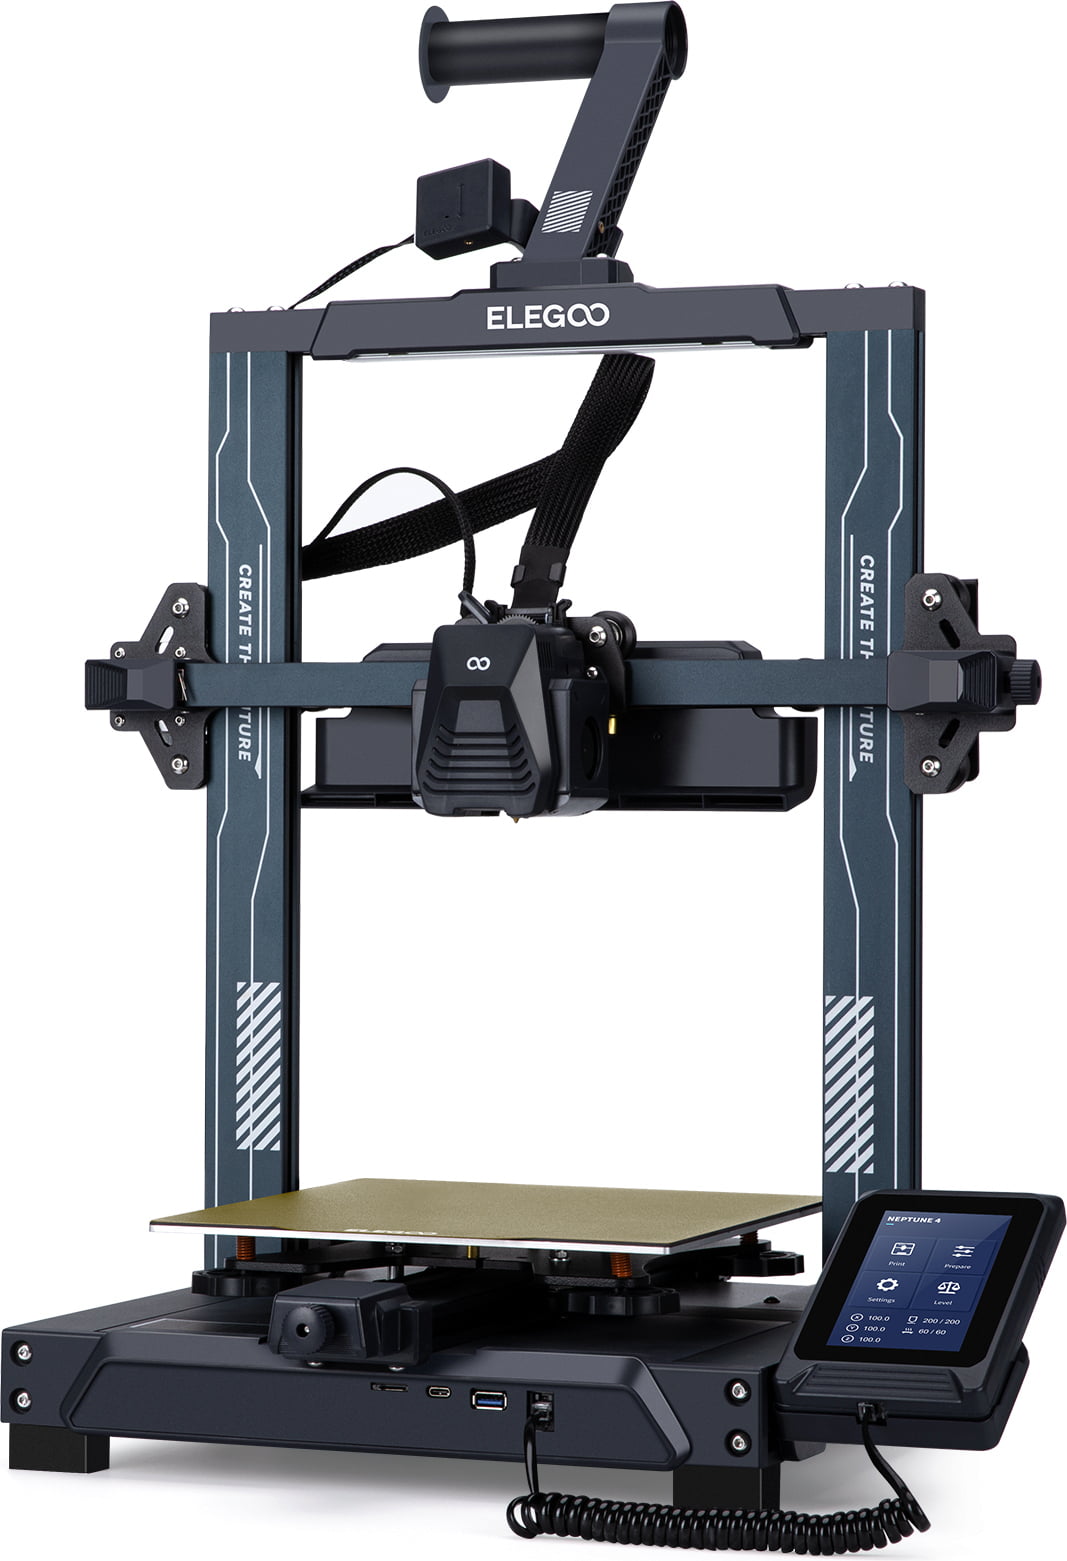 Elegoo Neptune 4 Pro 3D Printer, 3Ding India